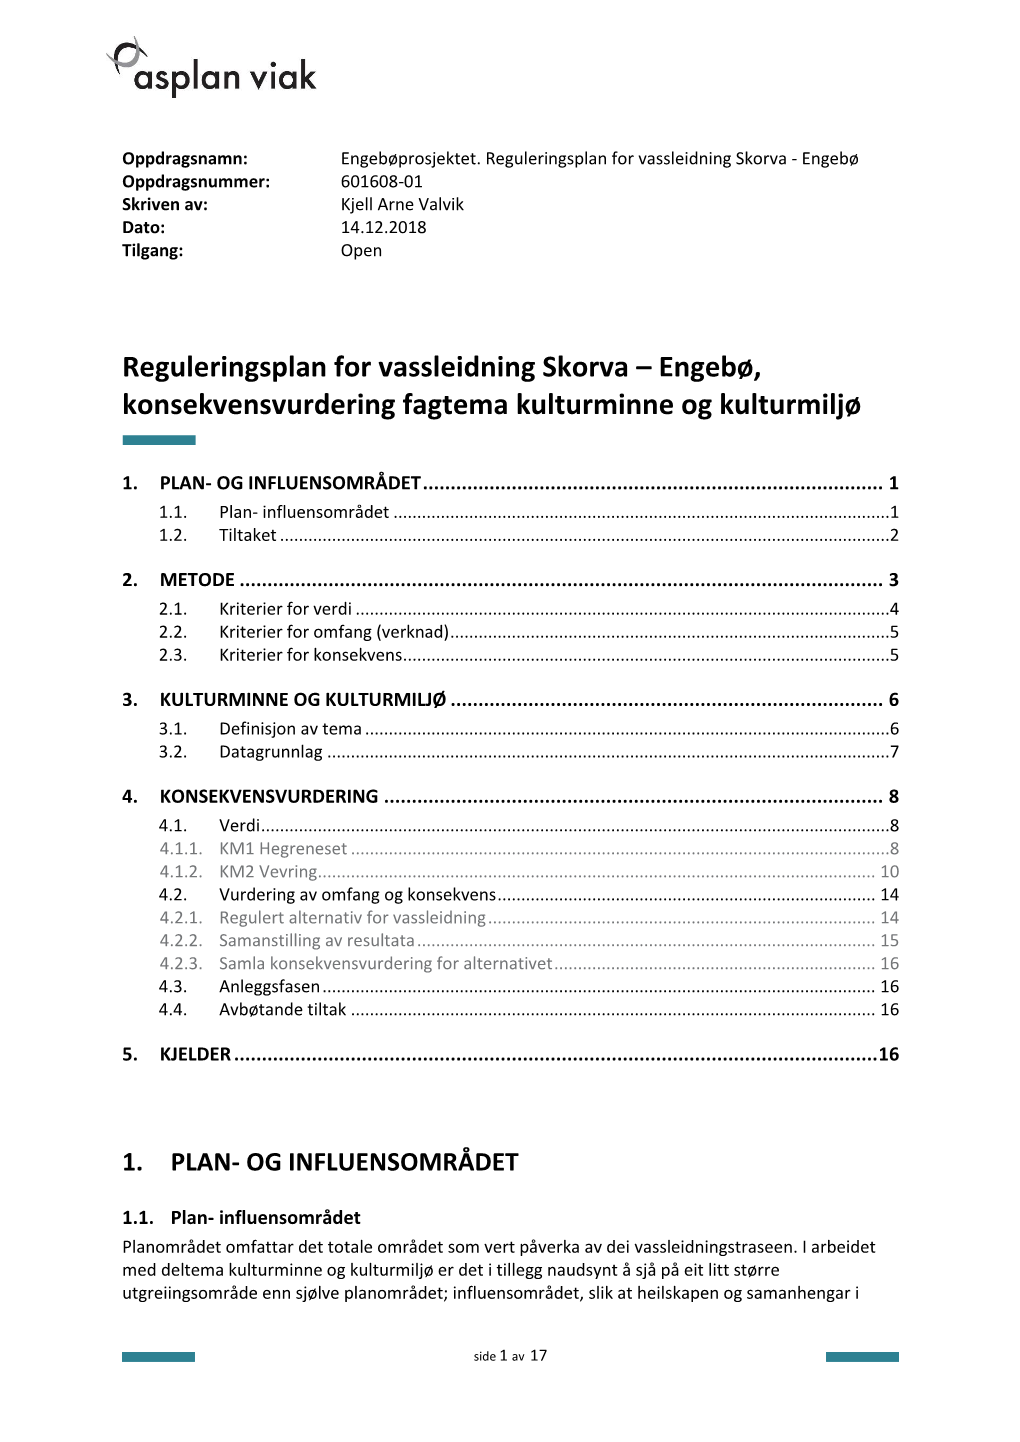 Reguleringsplan for Vassleidning Skorva – Engebø, Konsekvensvurdering Fagtema Kulturminne Og Kulturmiljø